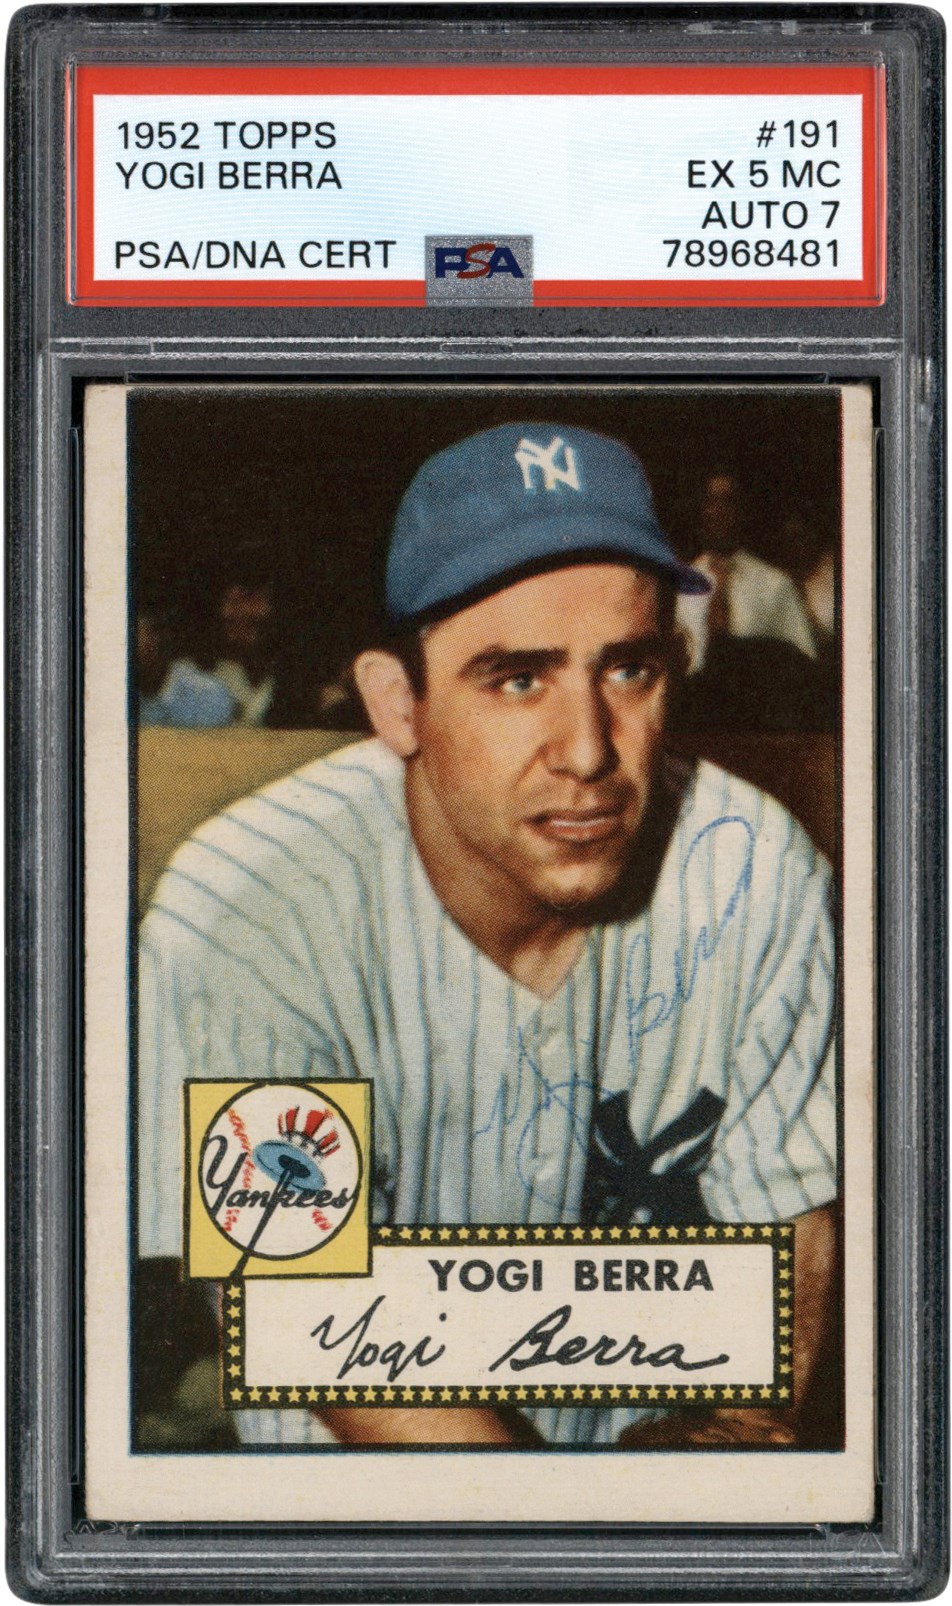 - 1952 Topps Baseball #191 Yogi Berra Signed Card PSA EX 5 (mc) Auto 7 (Highest Graded)